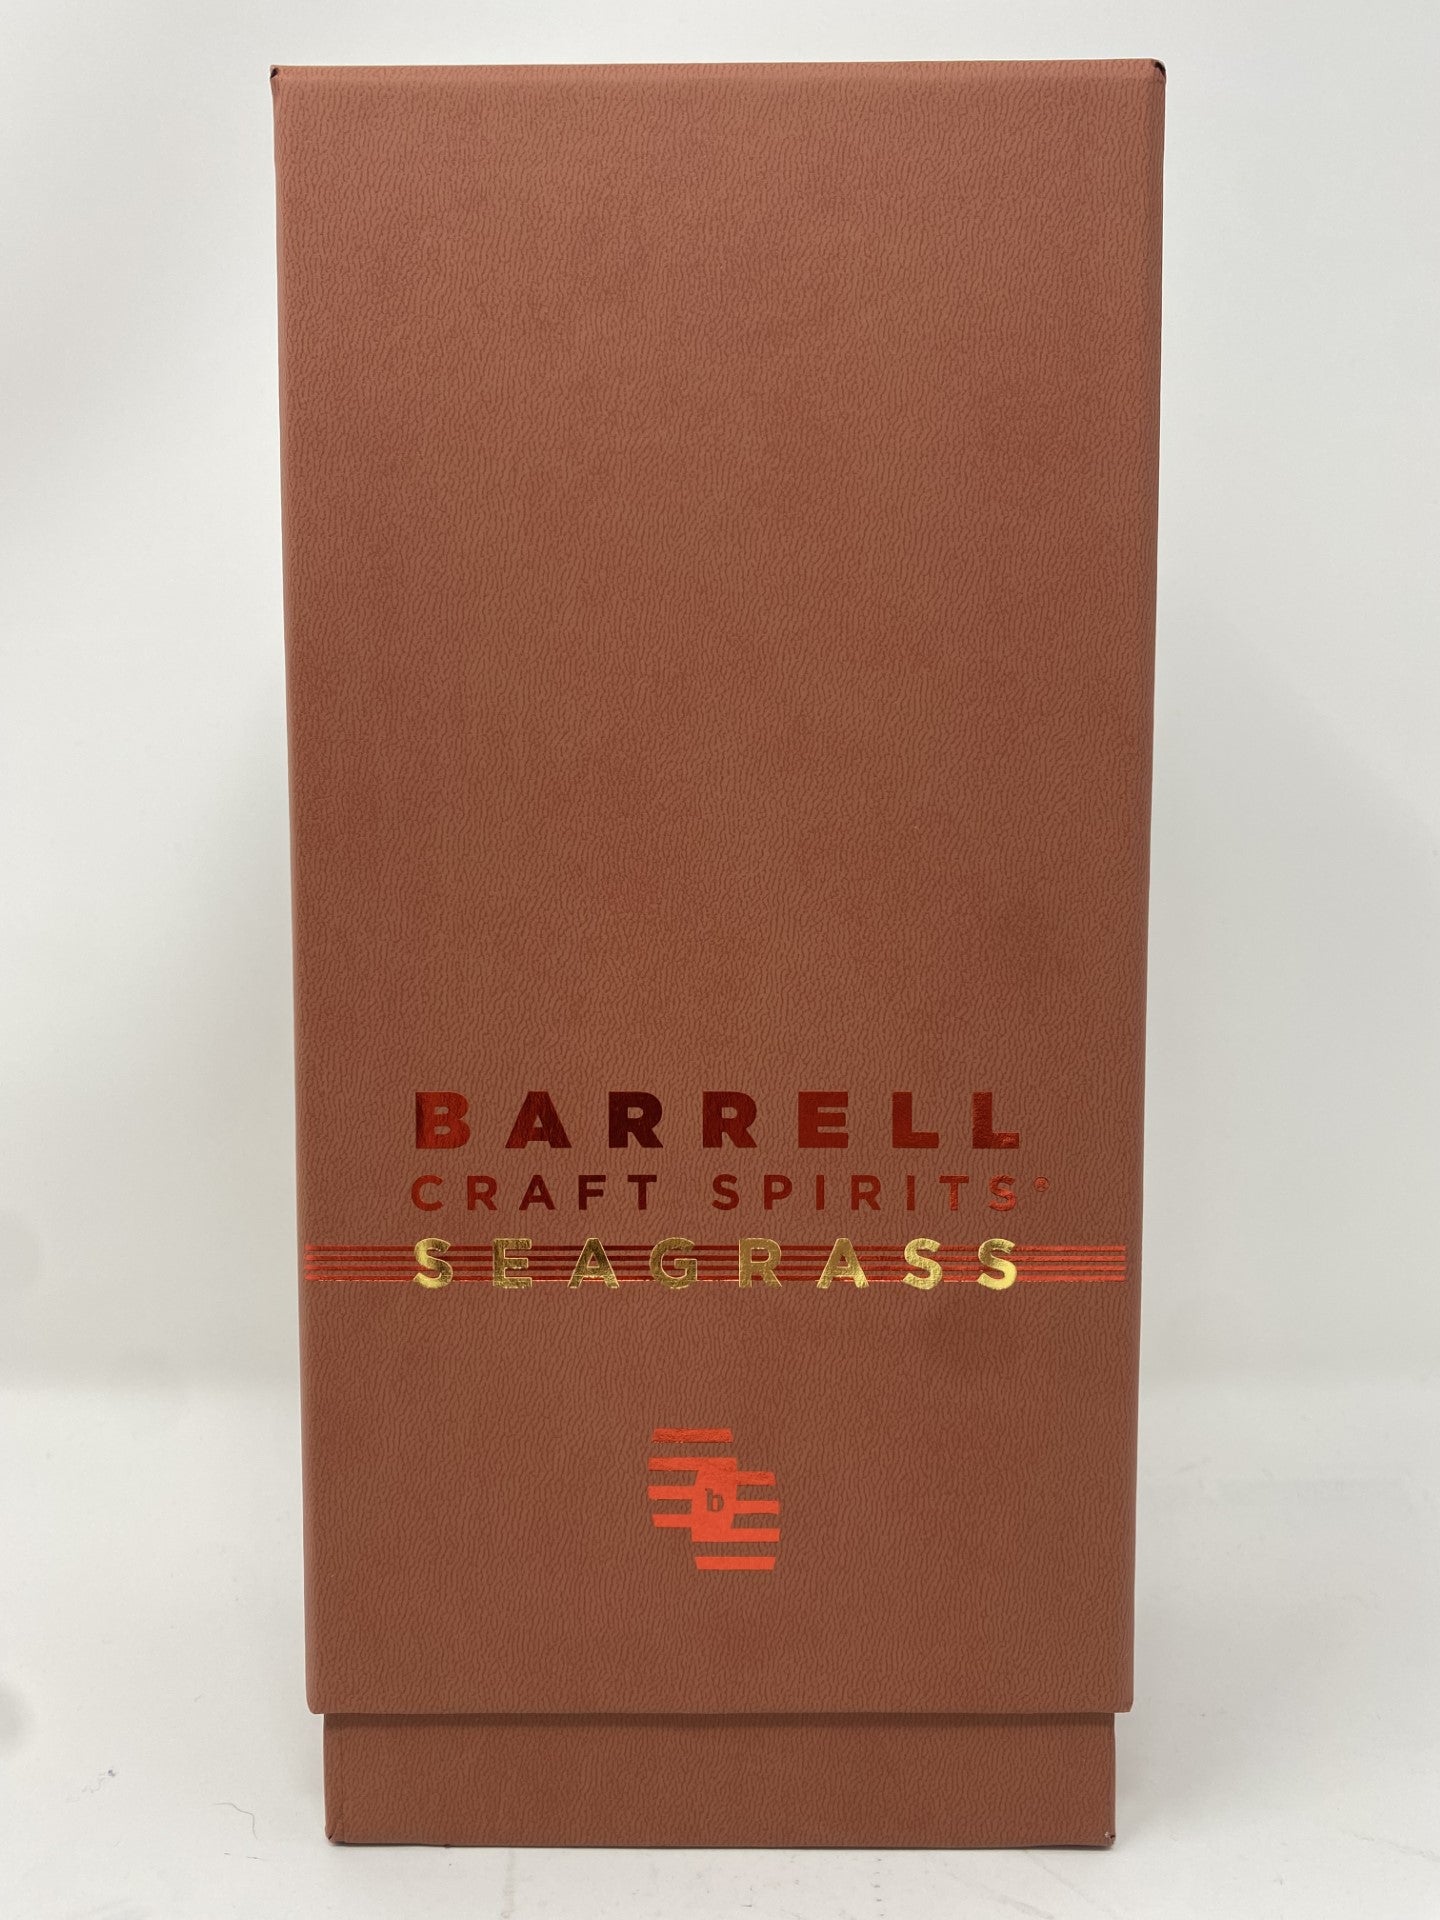 Barrell Craft Spirits Seagrass (Gold Label) Rye Whiskey